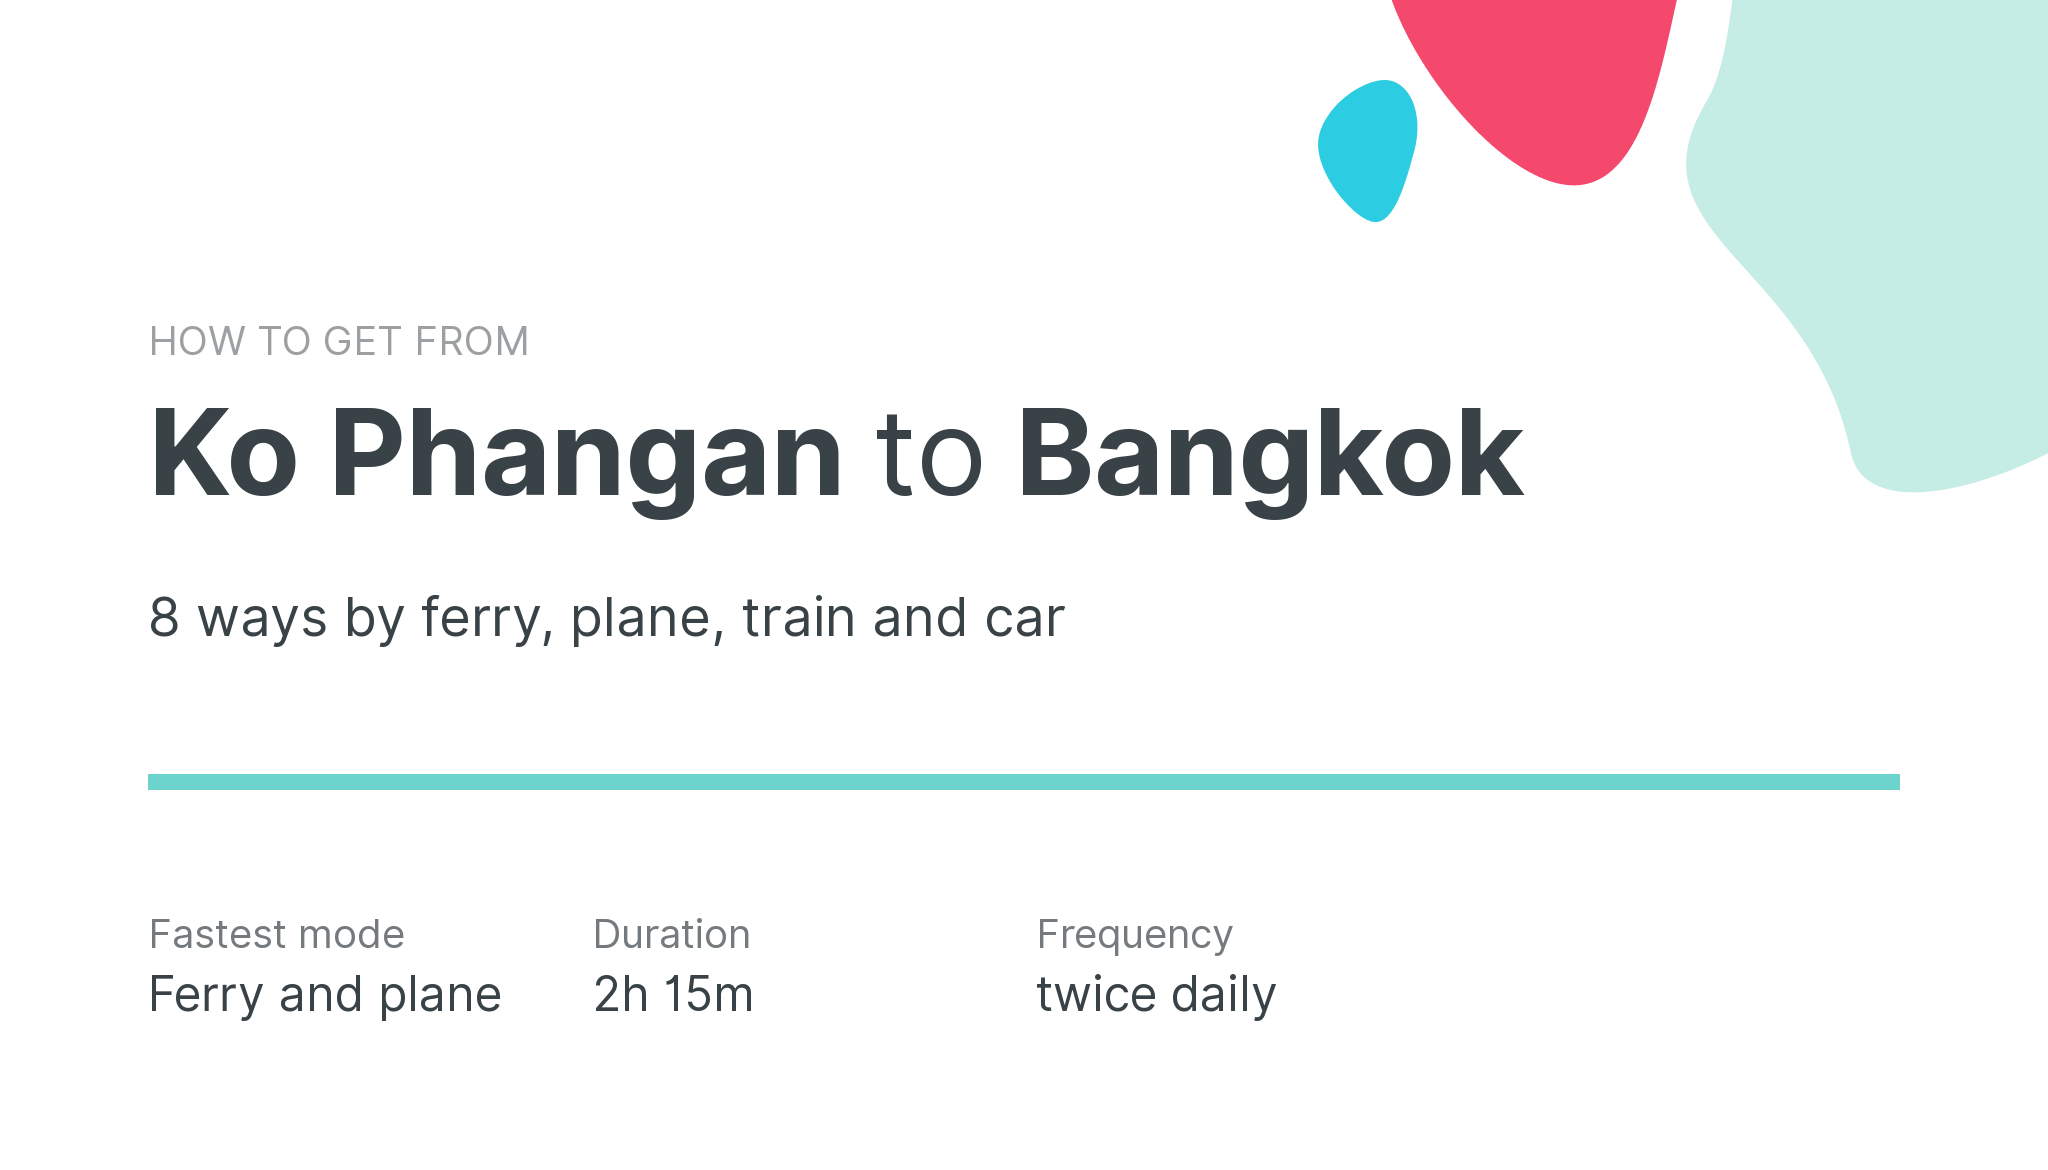 How do I get from Ko Phangan to Bangkok